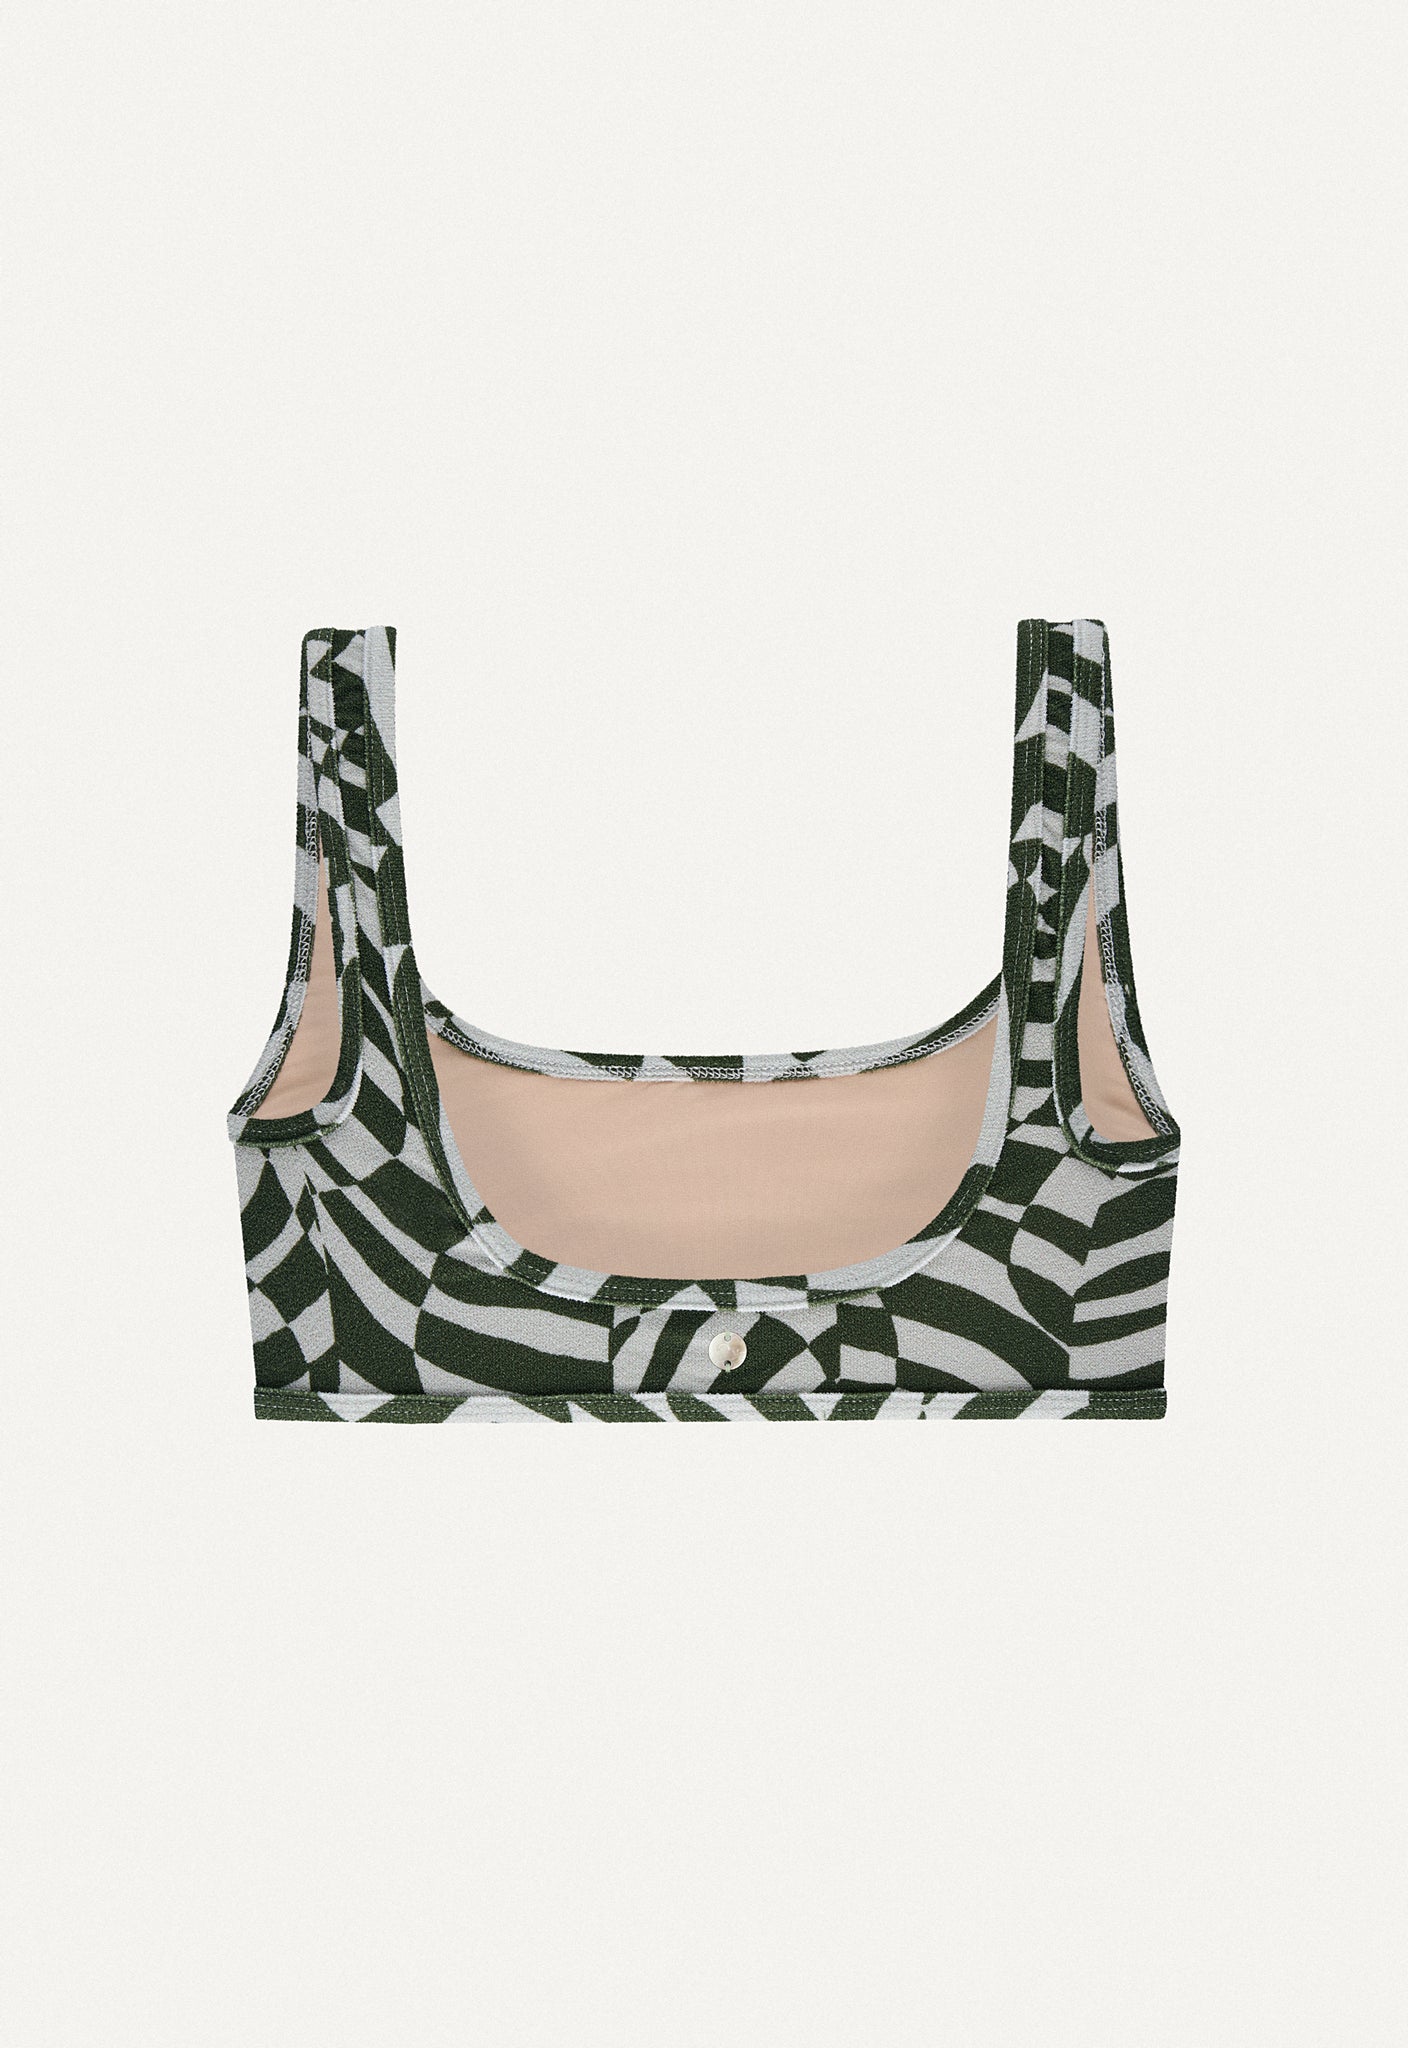 Bikini Top “Vento” in unreal zebra print